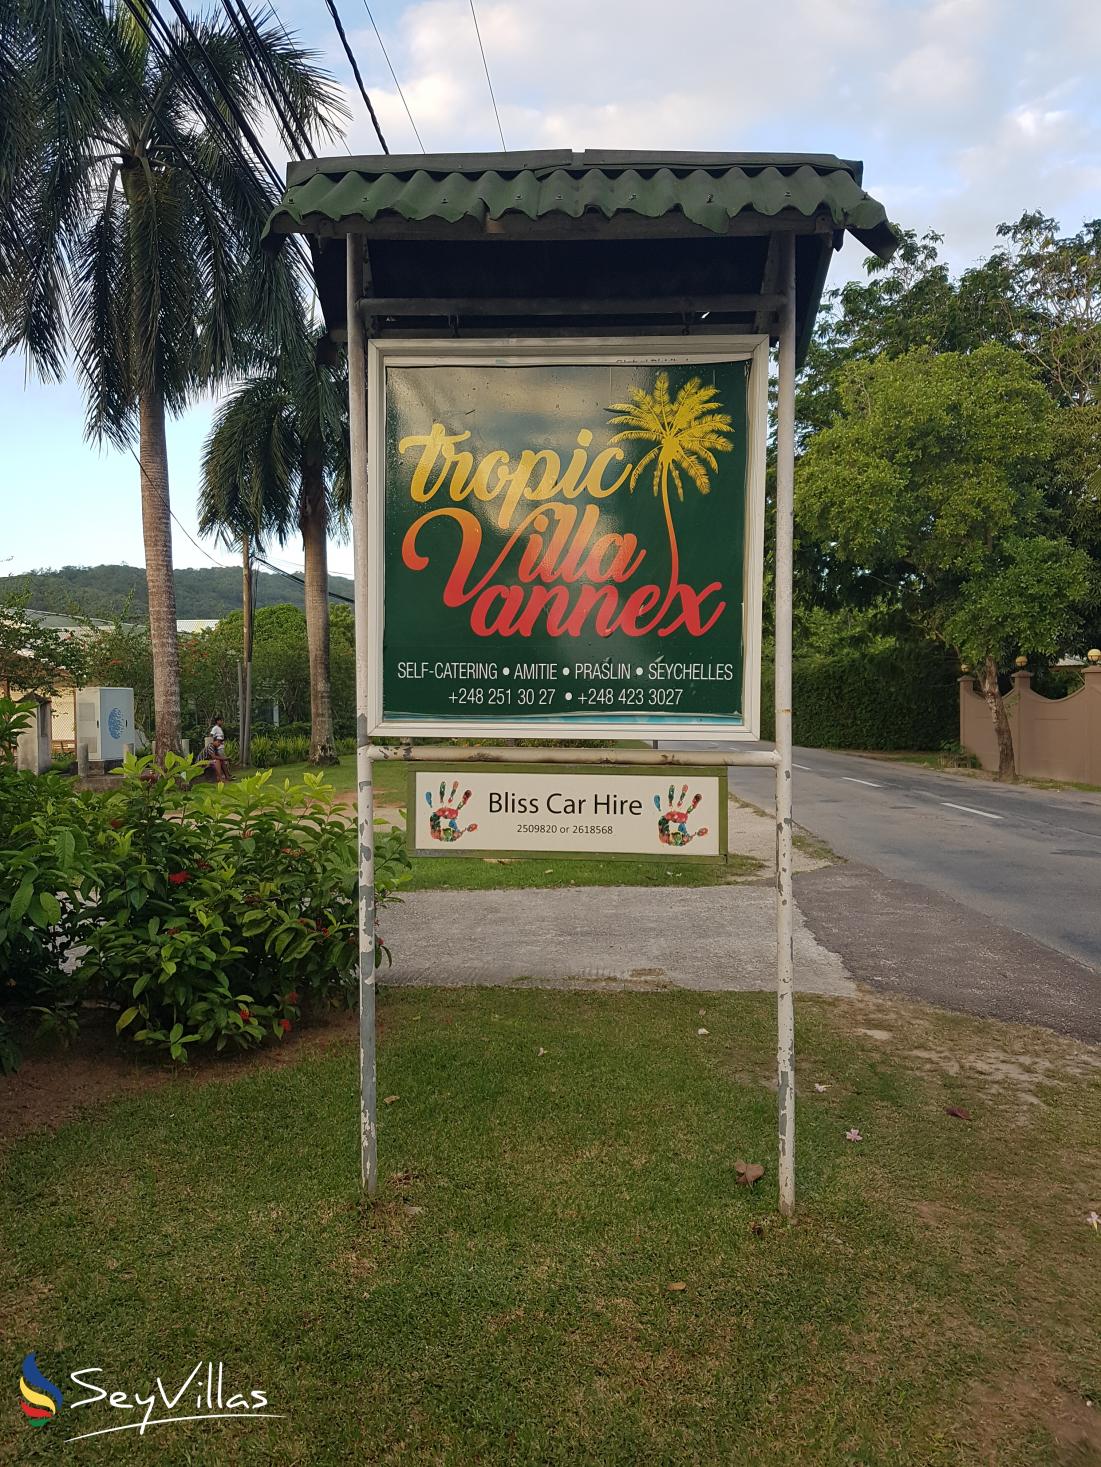 Photo 6: Tropic Villa Annex - Outdoor area - Praslin (Seychelles)